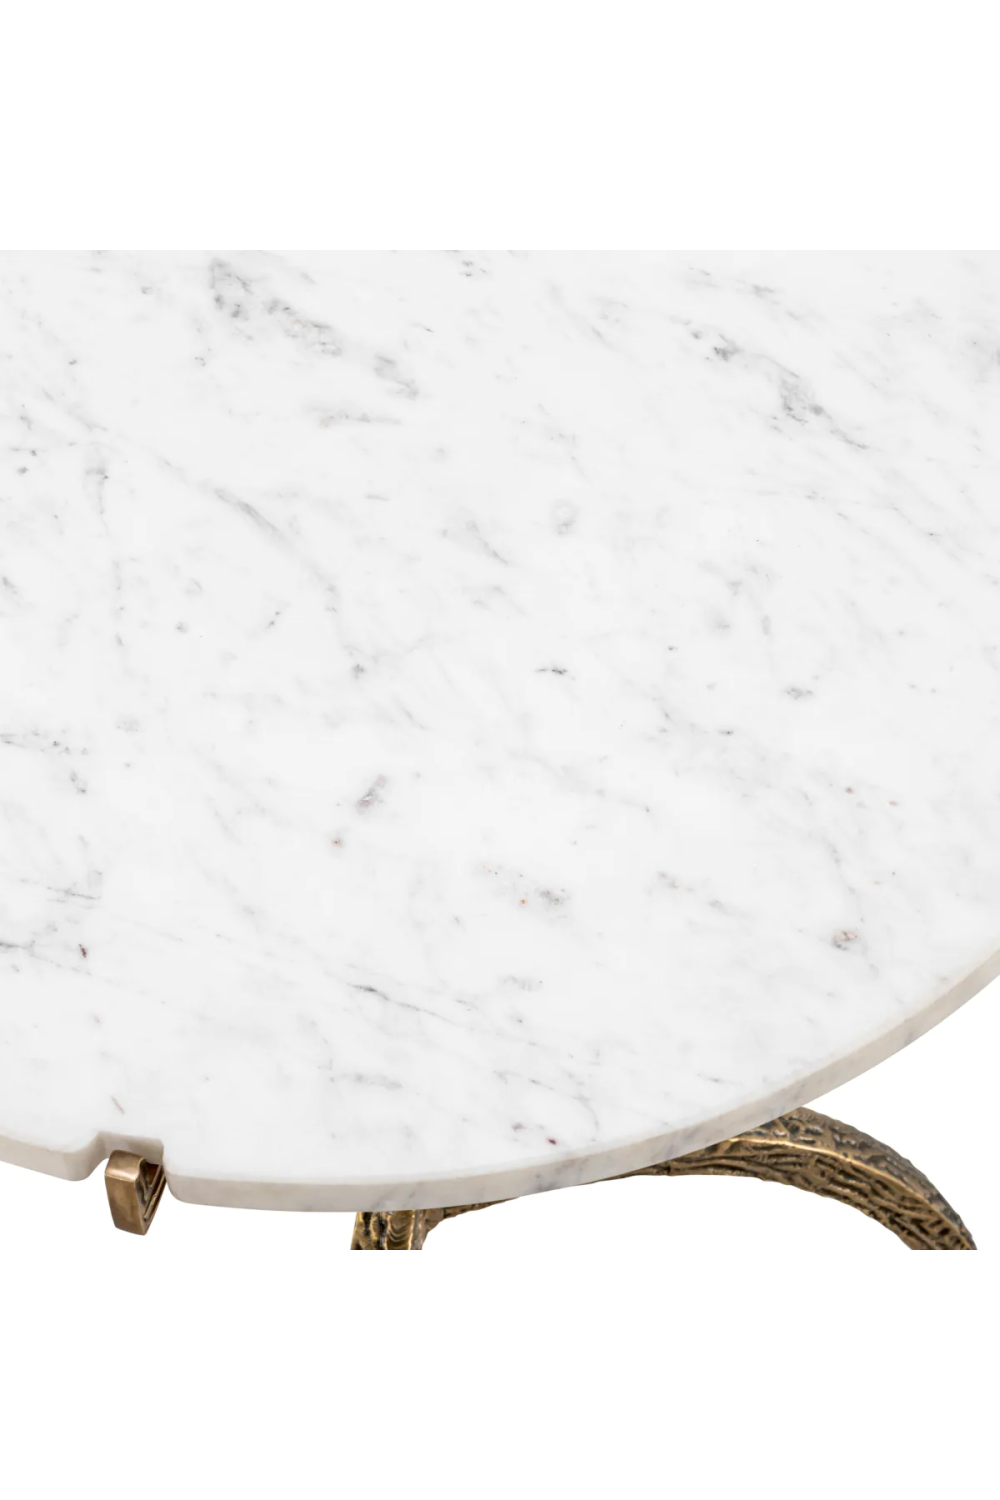 White Marble Round Dining Table | Eichholtz Cortina